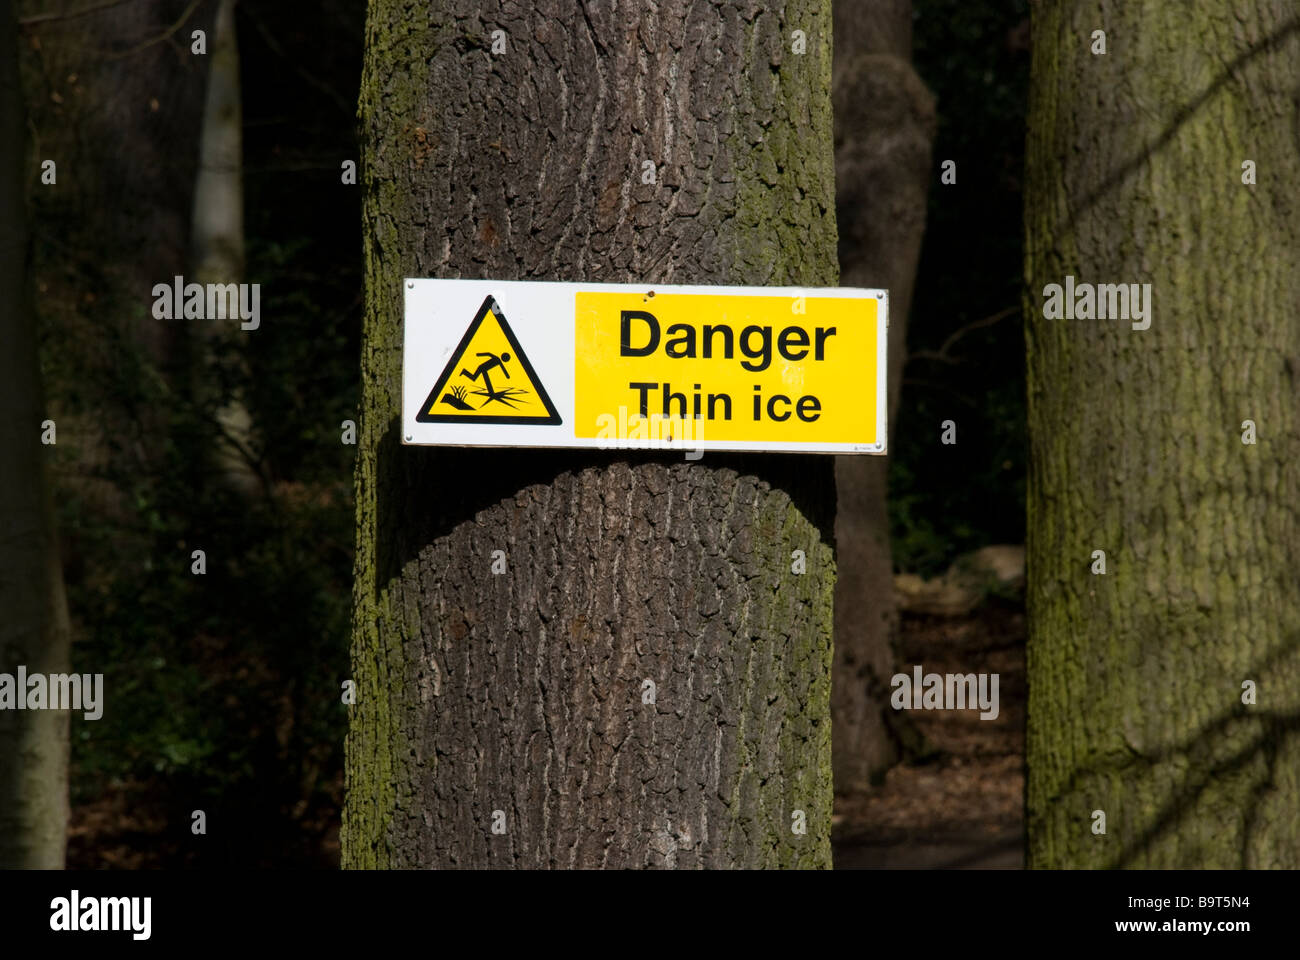 danger thin ice lake notice warning sign park tree wood bark wimbledon common nail Stock Photo